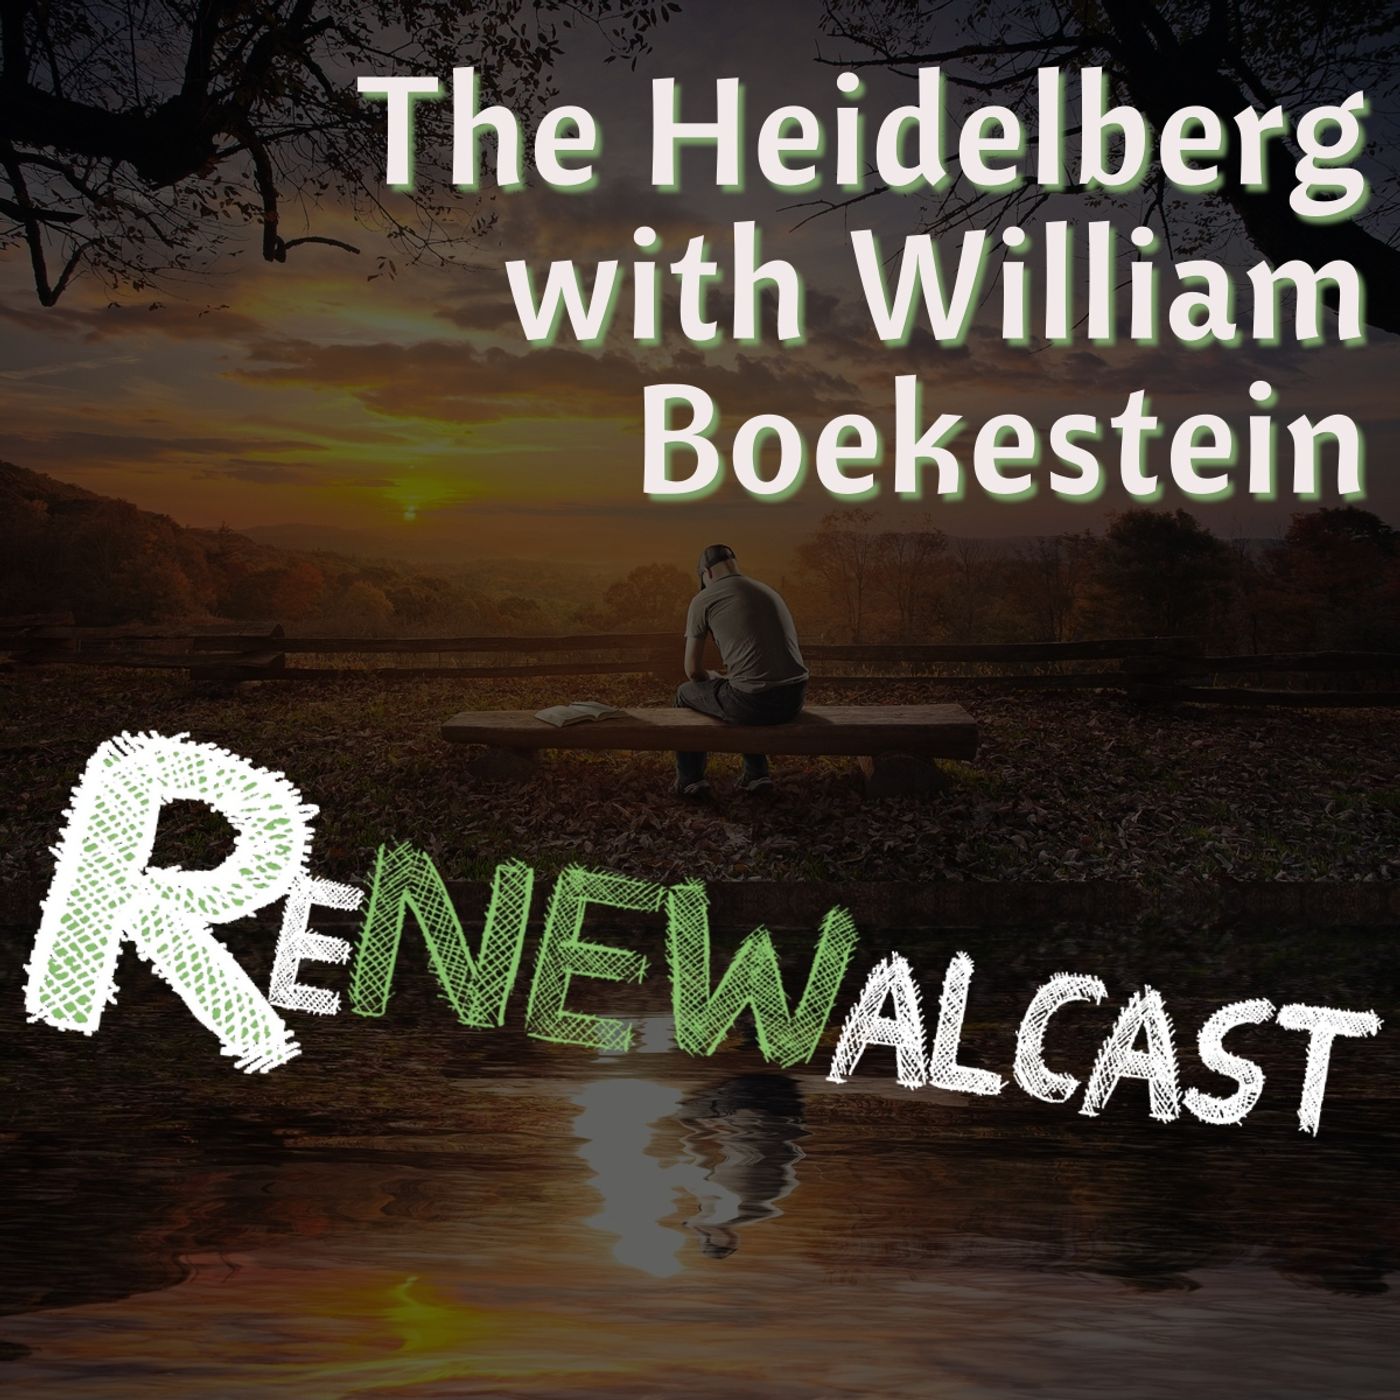 The Heidelberg with William Boekestein